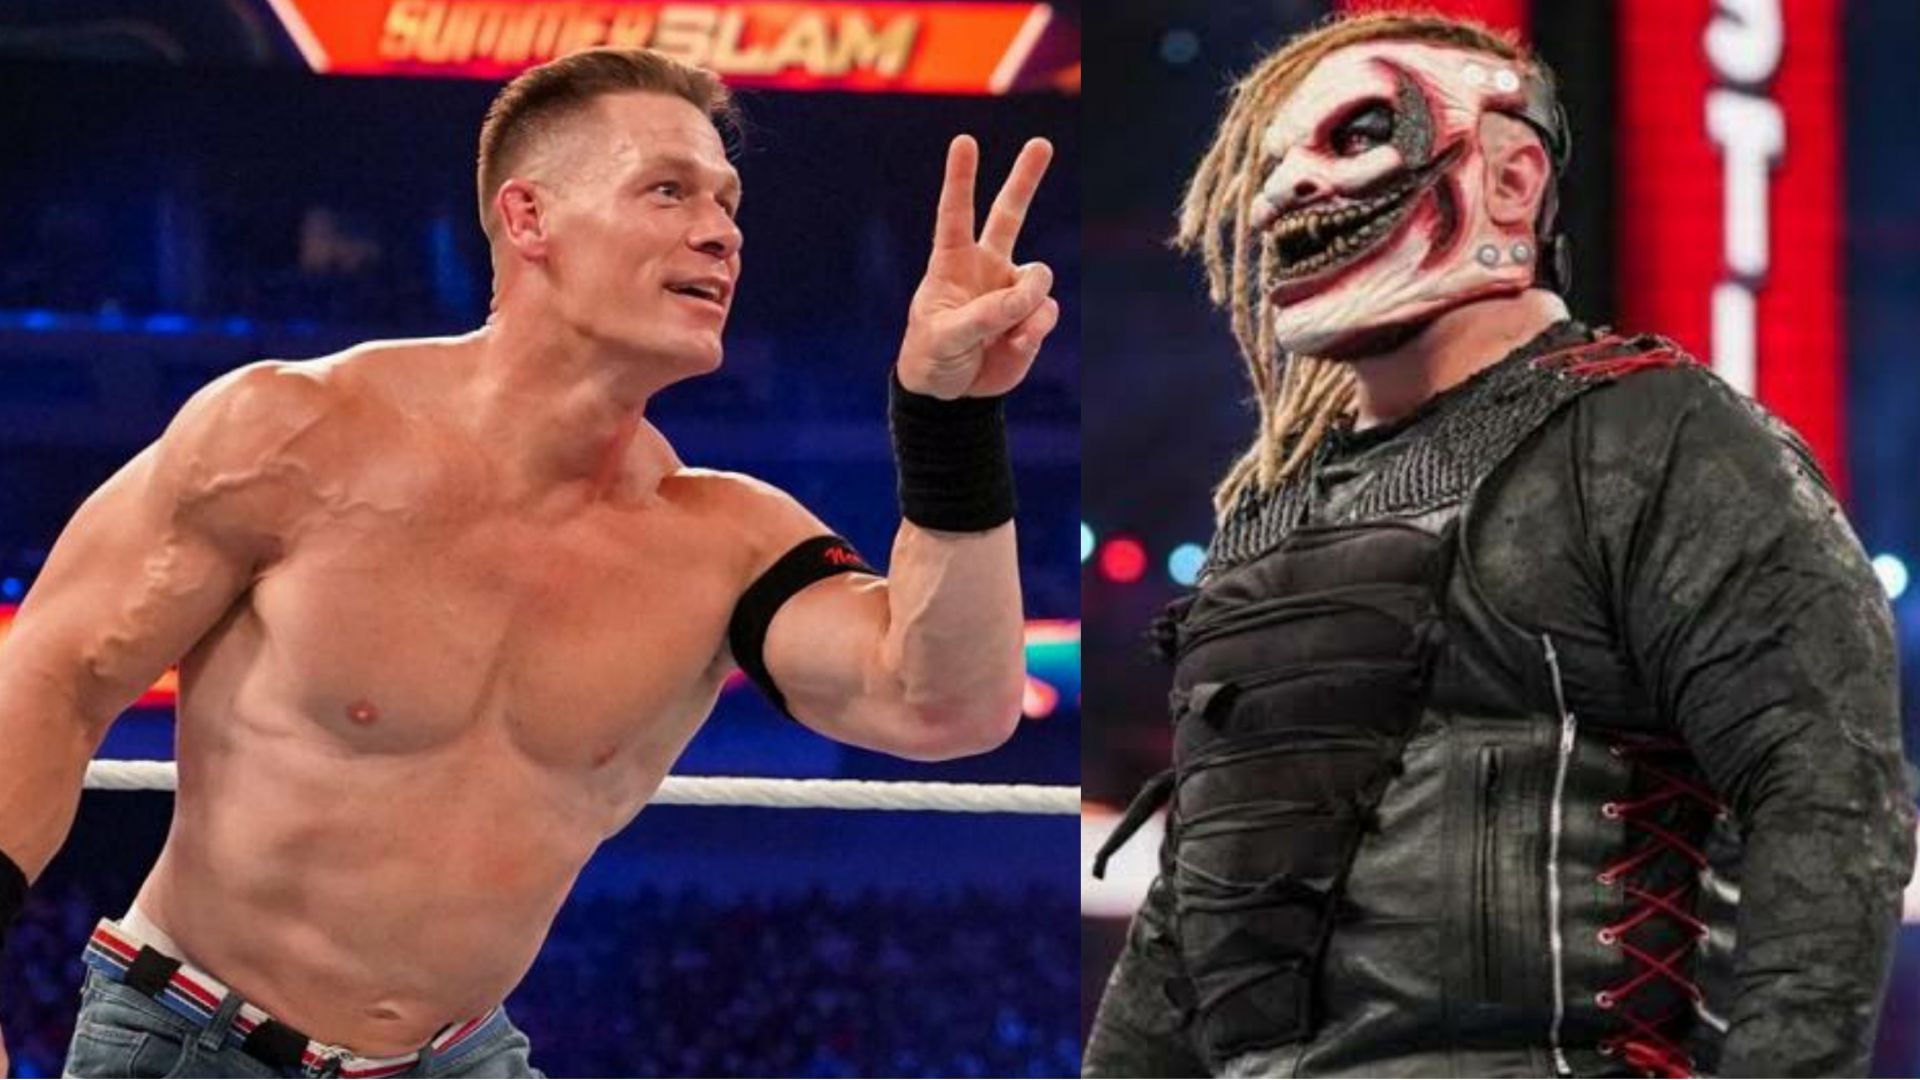 John Cena and Bray Wyatt were among the rumors in August.